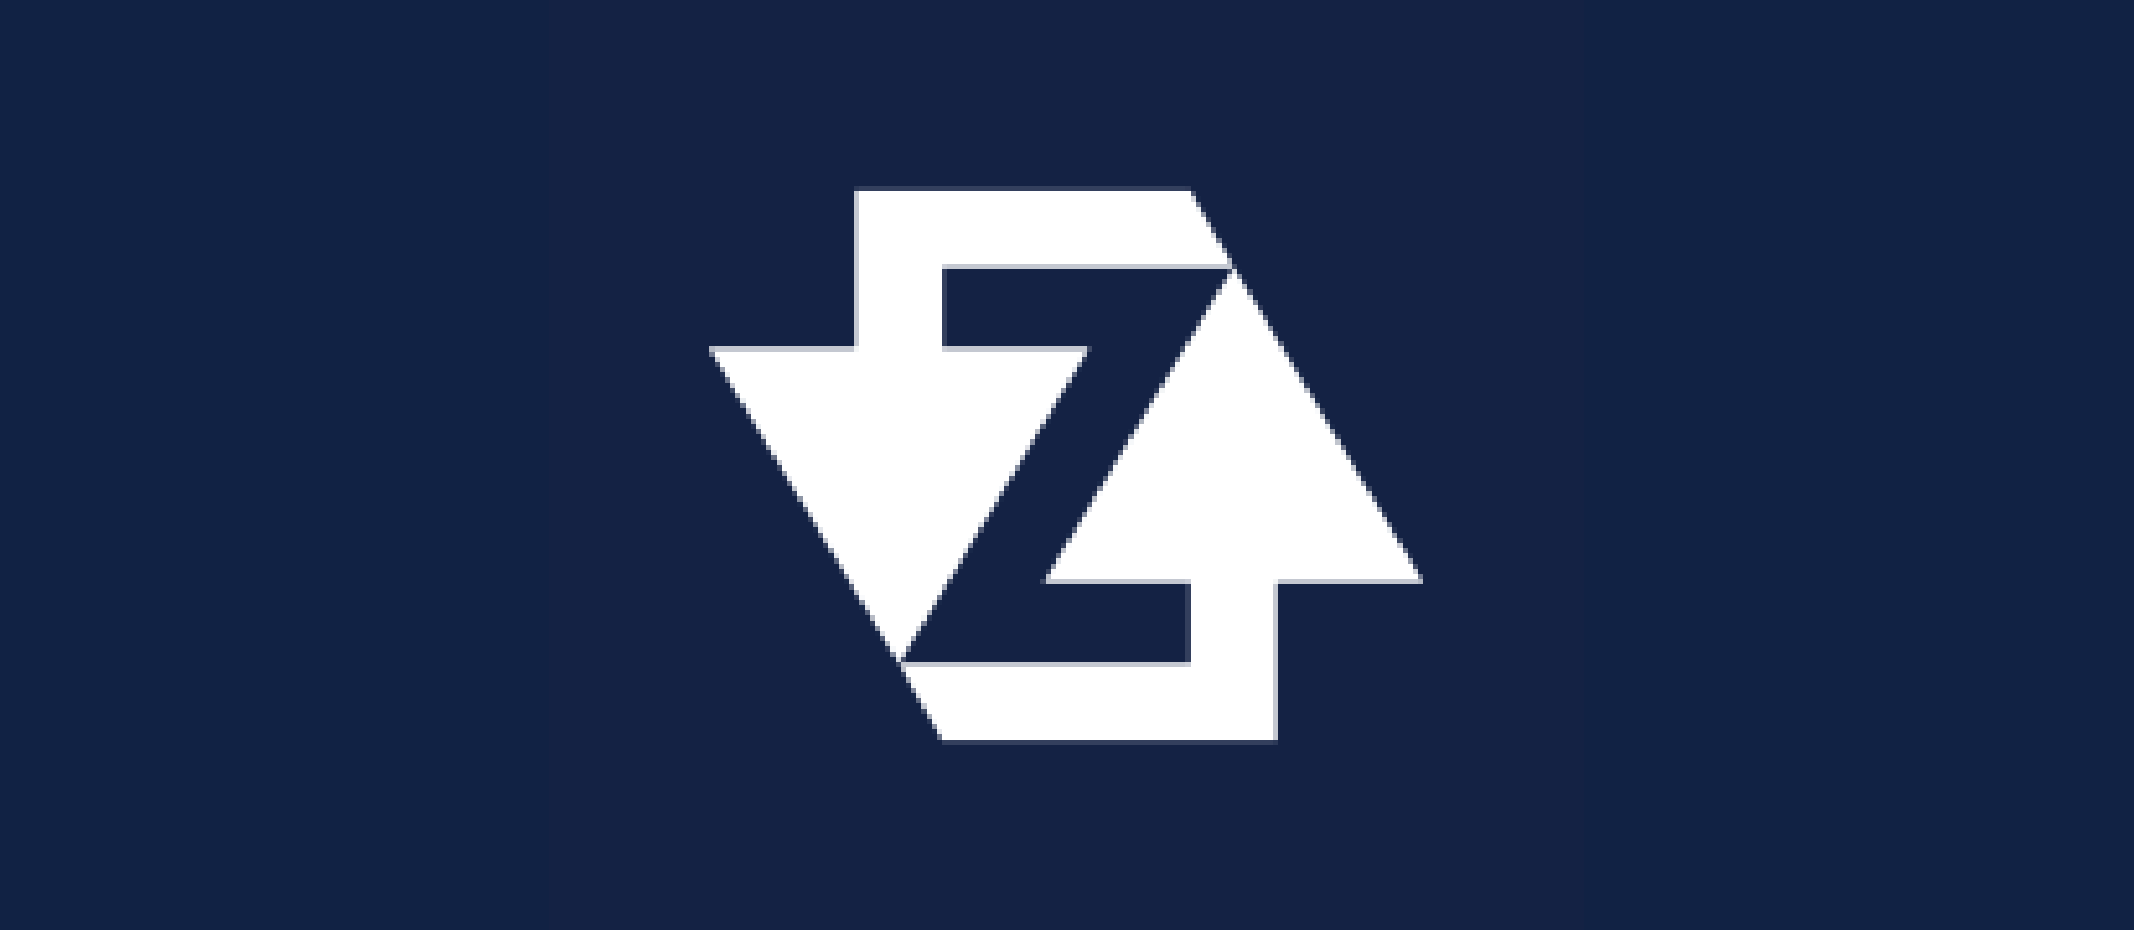 Zehnder Communications Logo